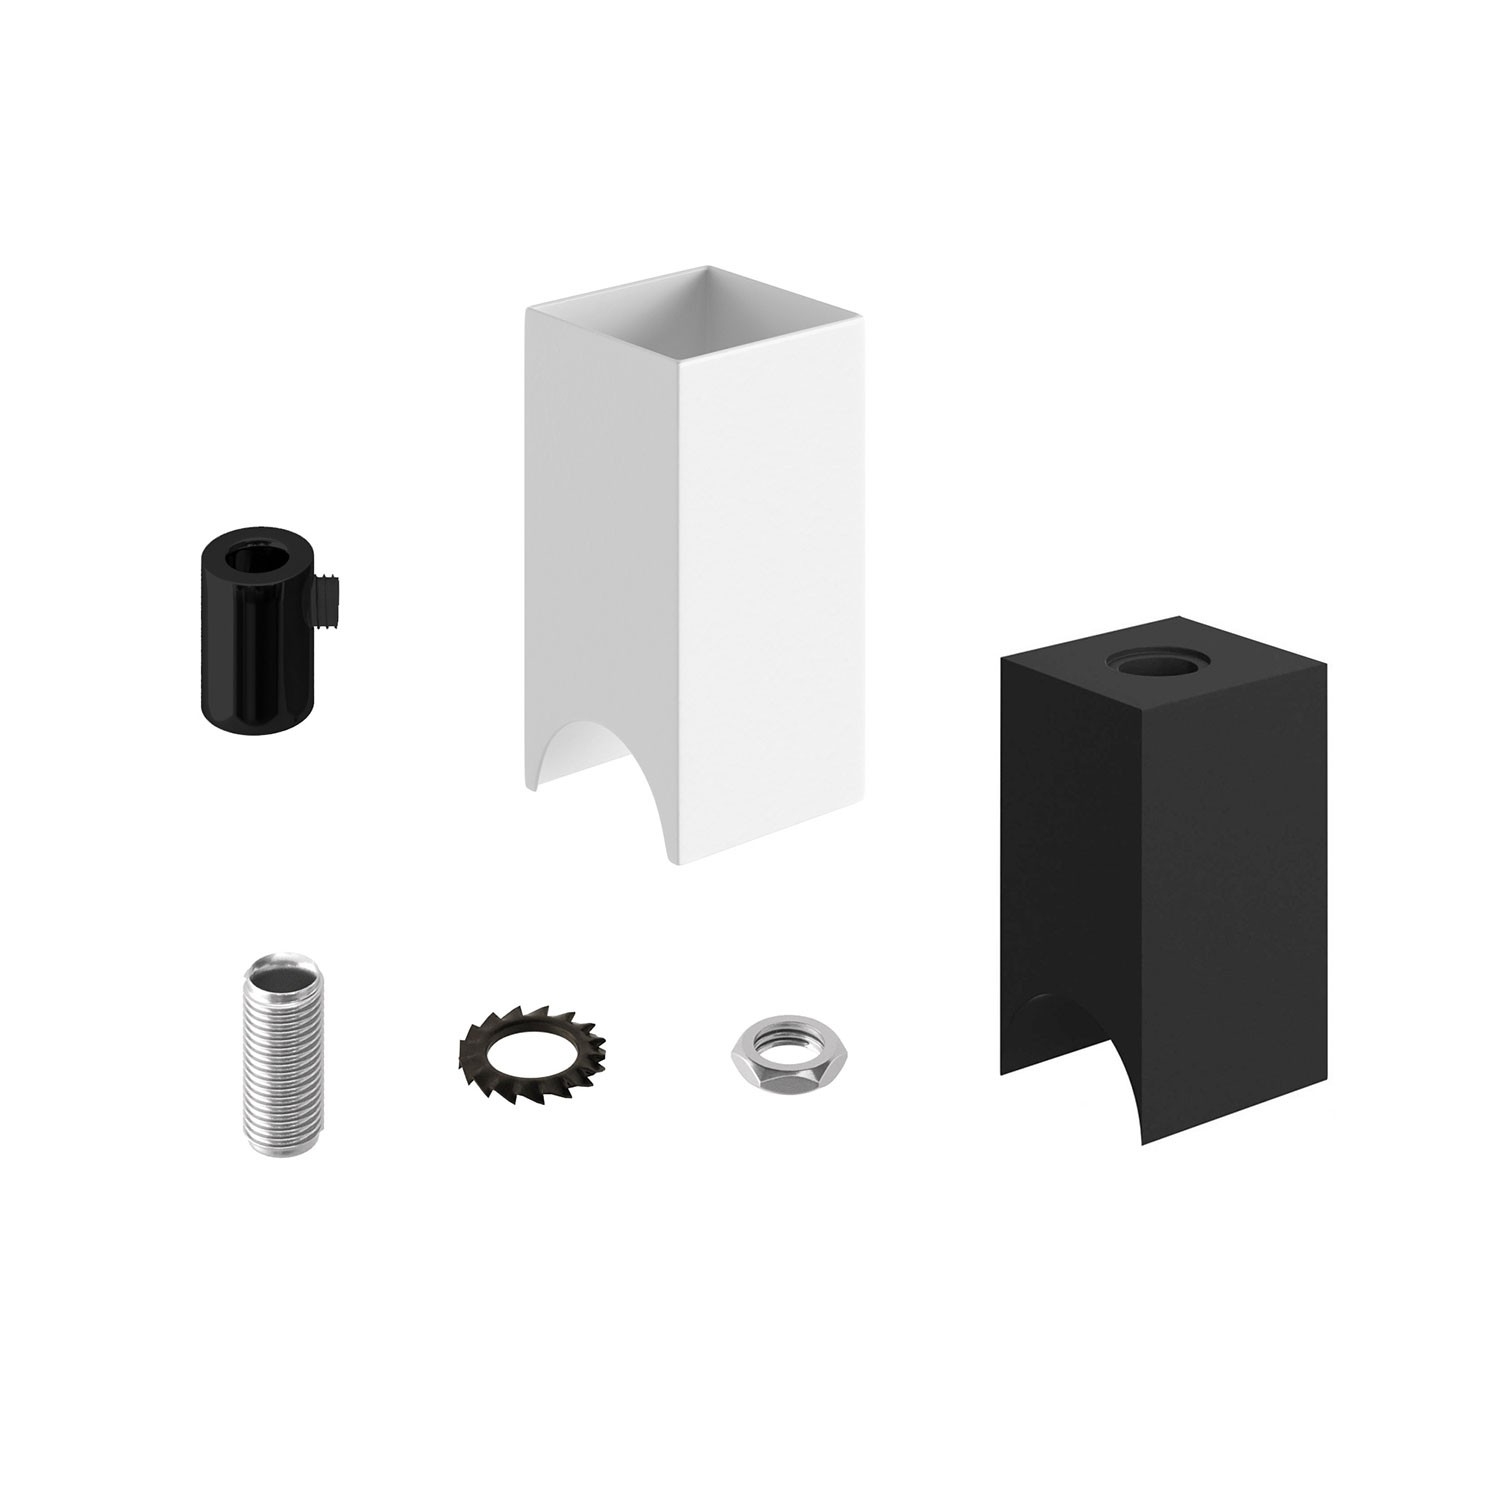 Syntax - Minimal Black Thermoplastic Socket for S14d tube bulbs